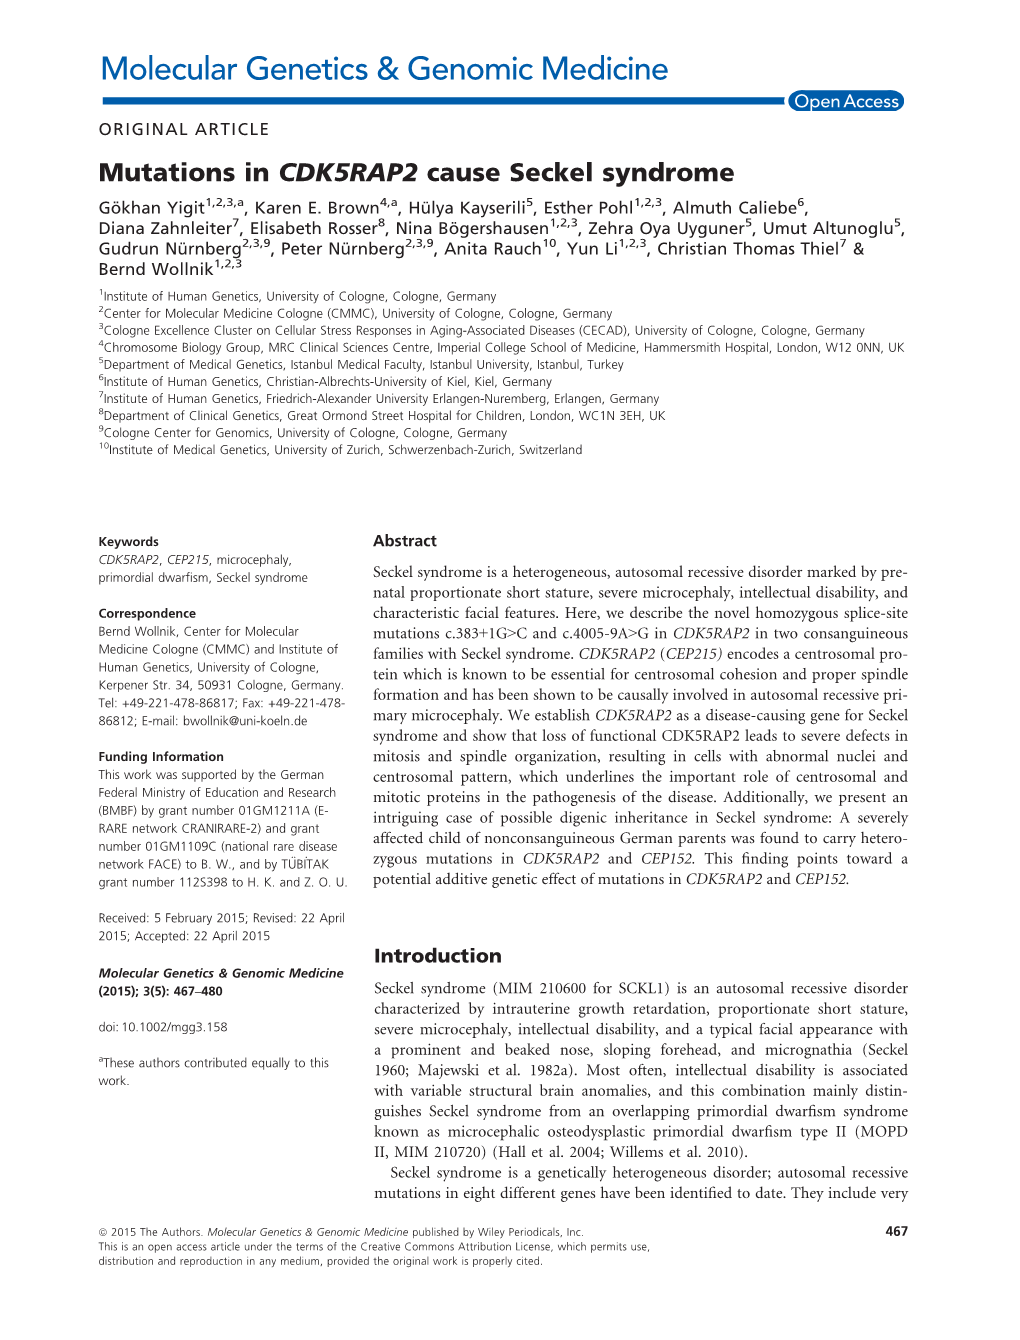 Mutations in CDK5RAP2 Cause Seckel Syndrome Go¨ Khan Yigit1,2,3,A, Karen E